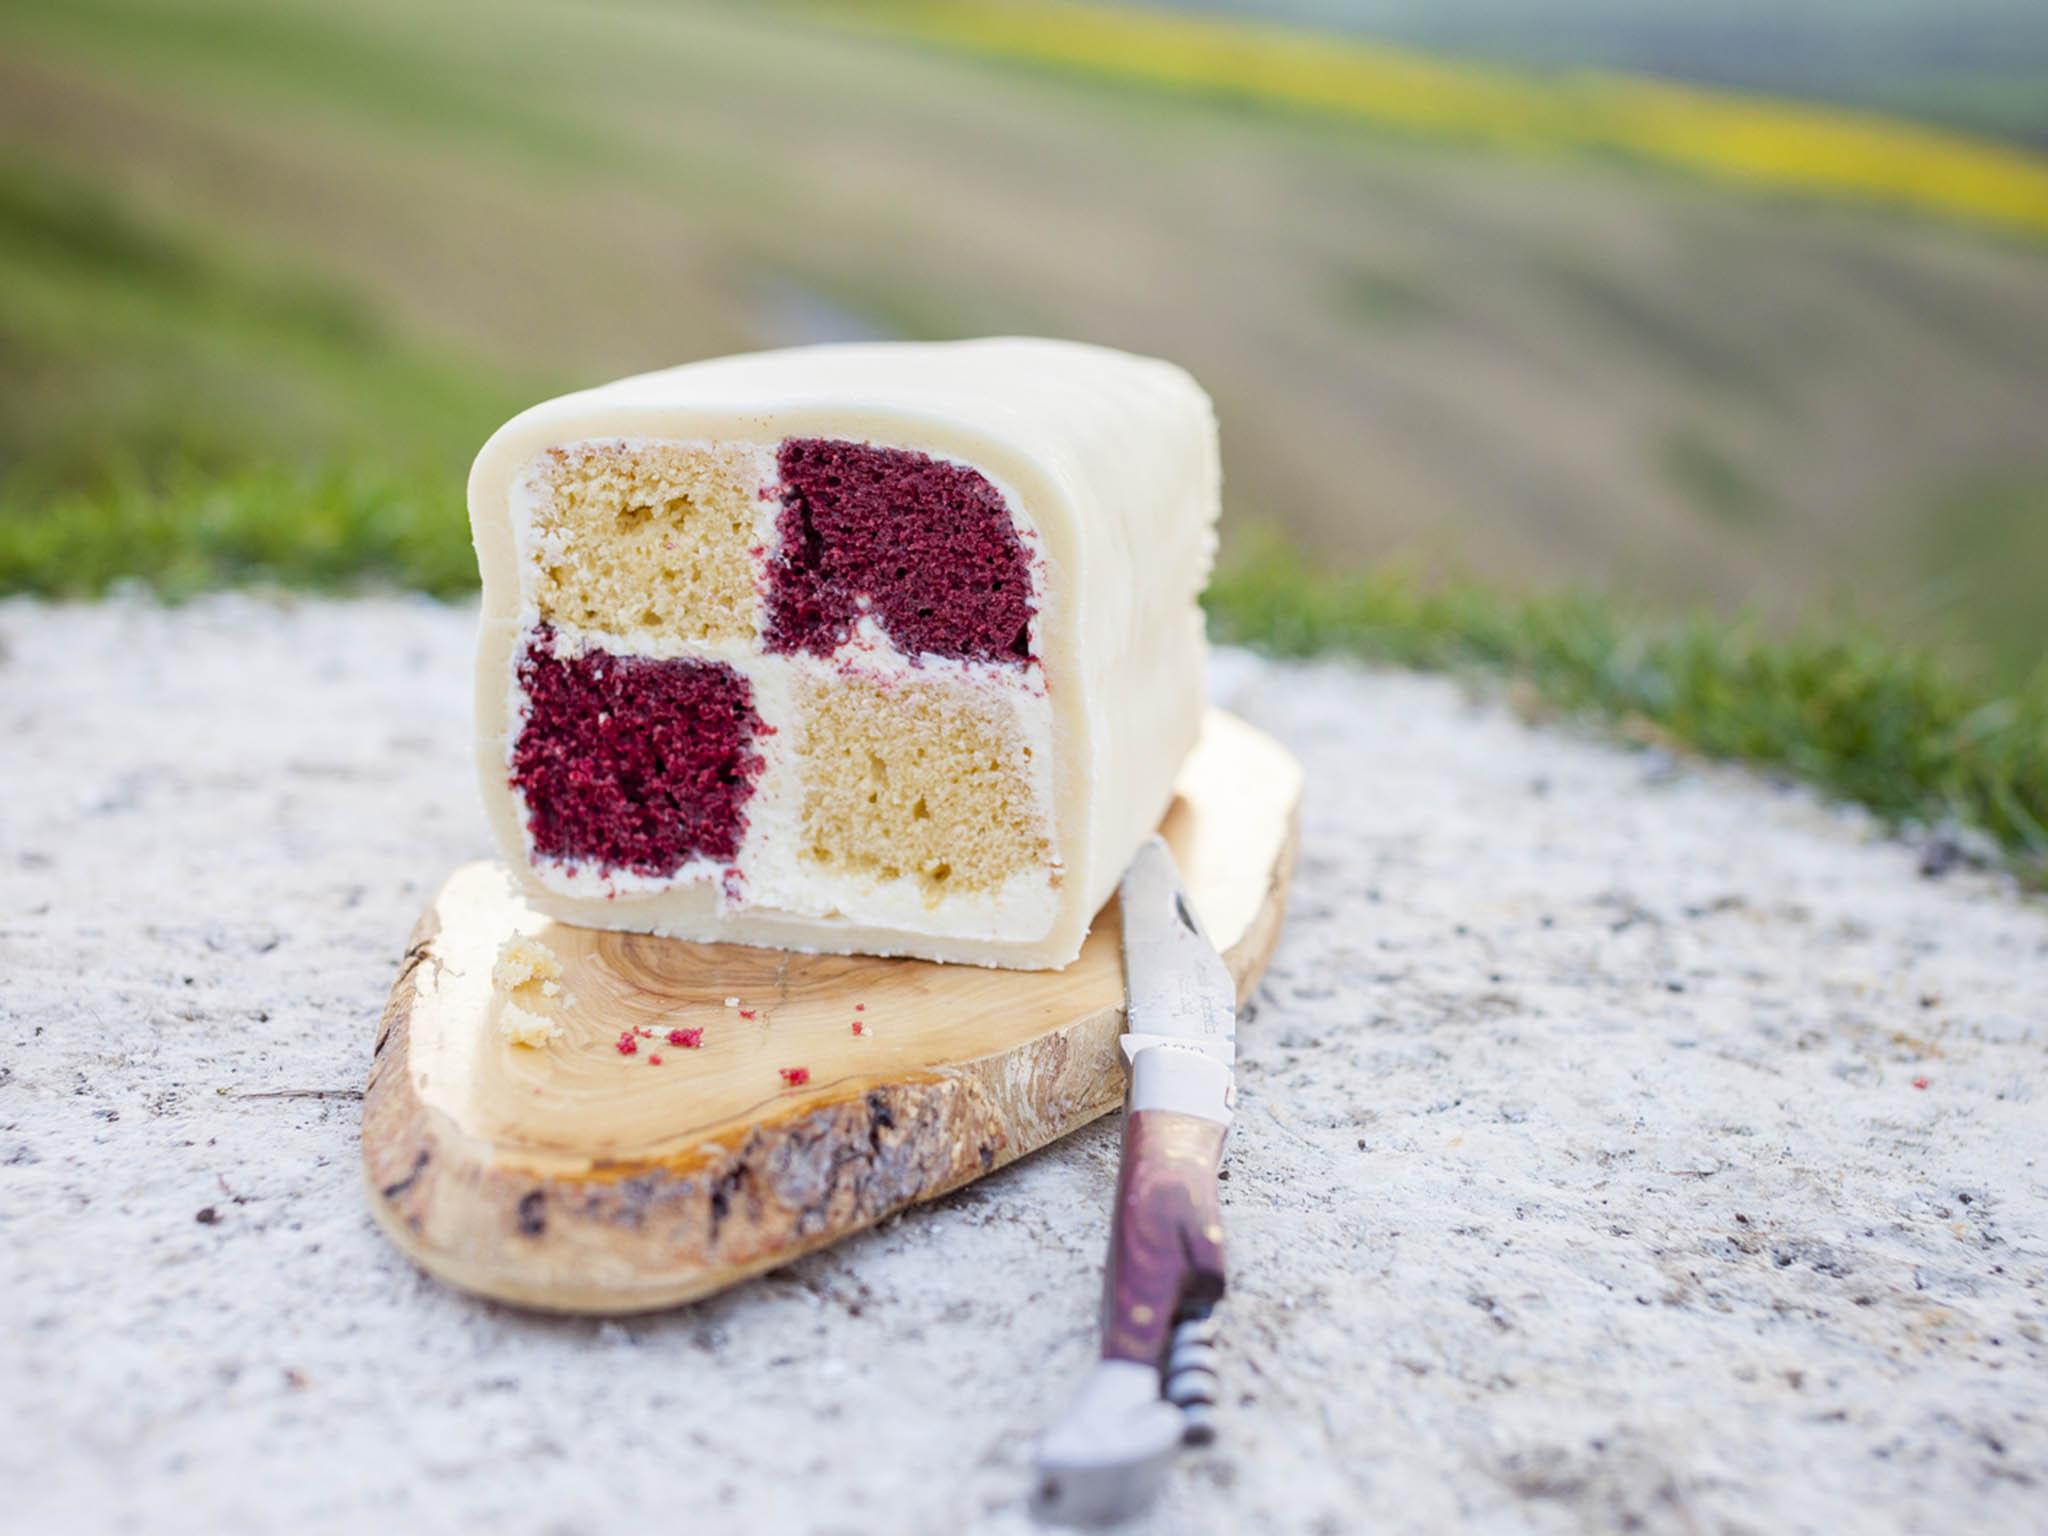 Battenberg Cake – Daring Bakers Challenge June 2012 « Leave Room for Dessert